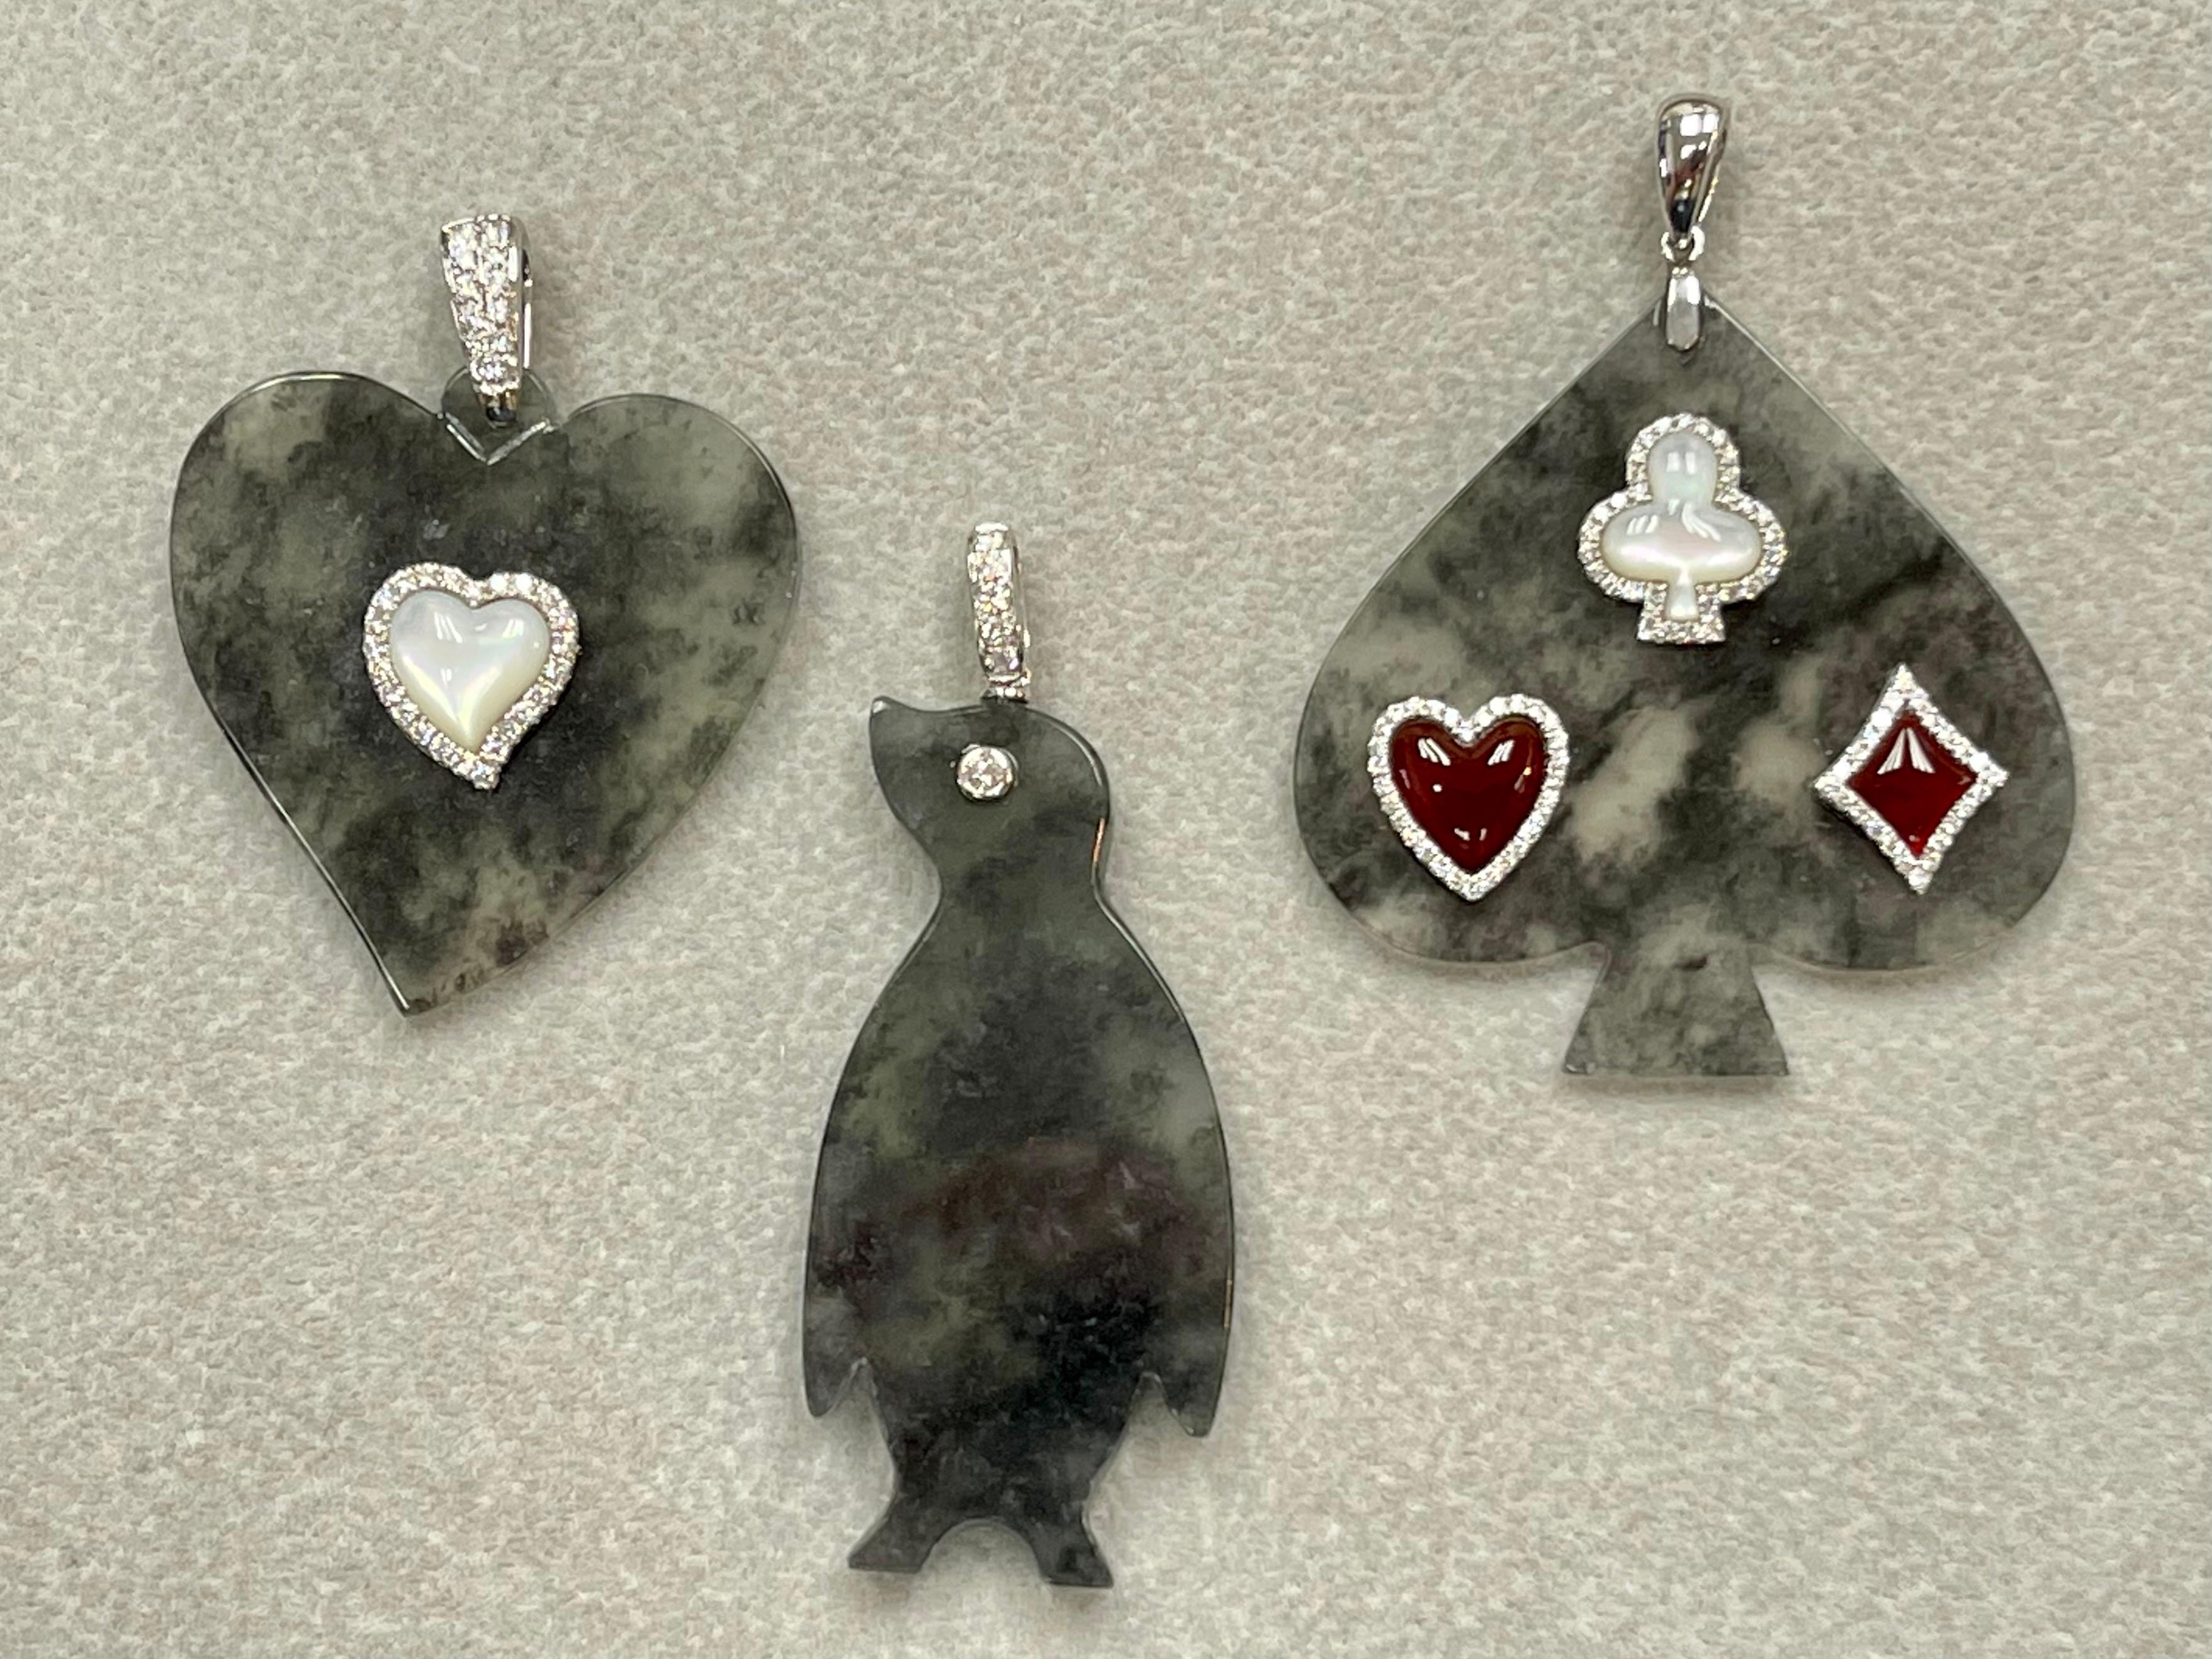 Certified Icy Black Jade & Diamond Penguin Pendant Necklace, Specialty Cut 8